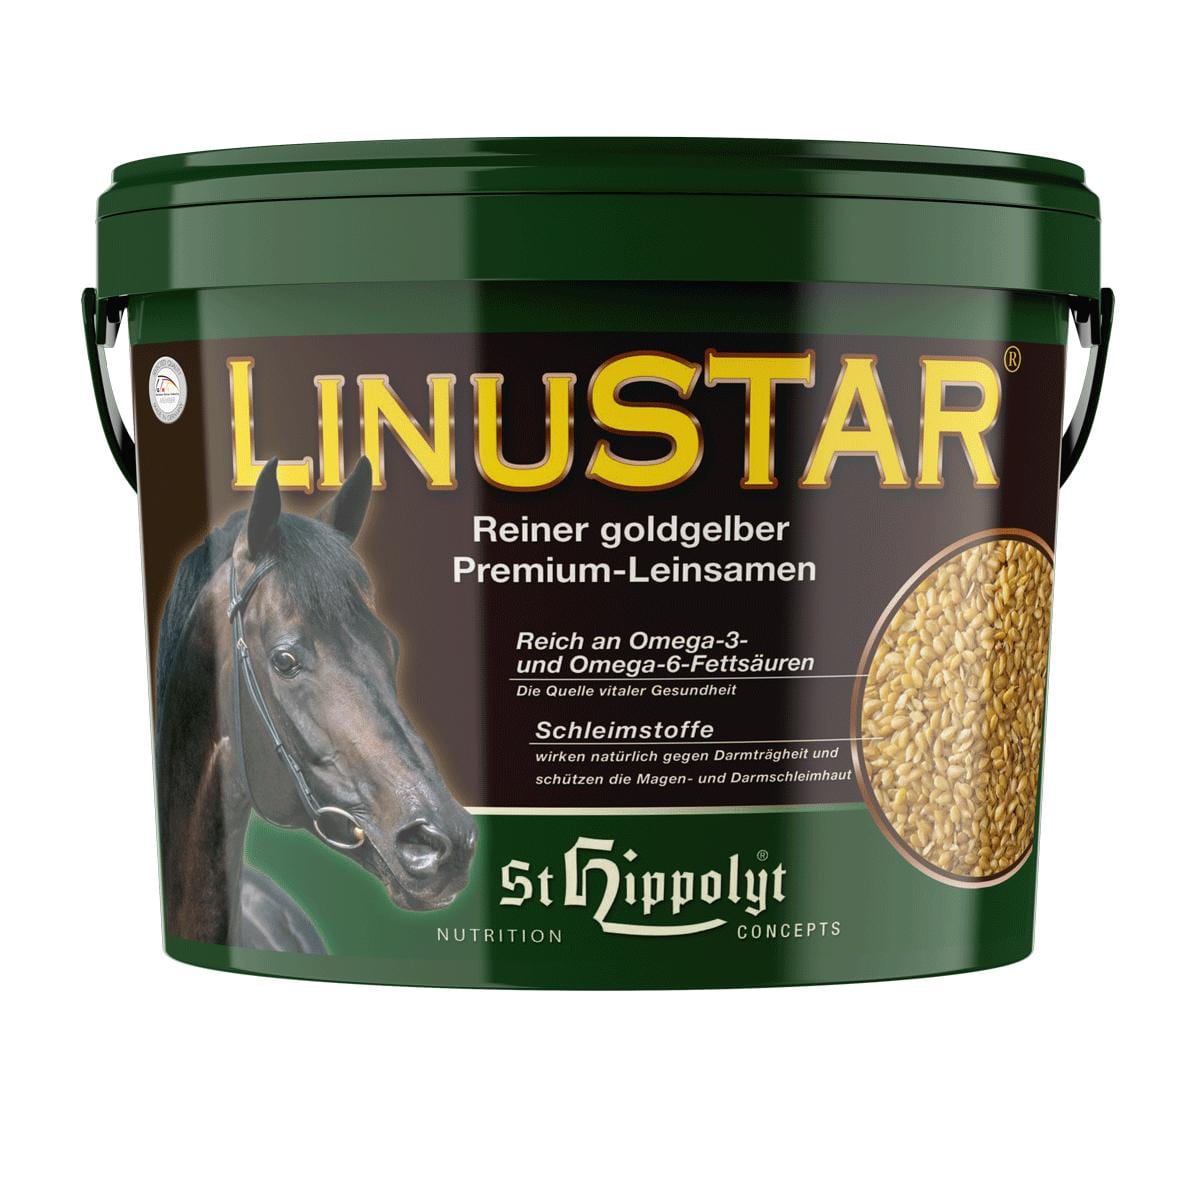 St Hippolyt LinuStar 3 kg